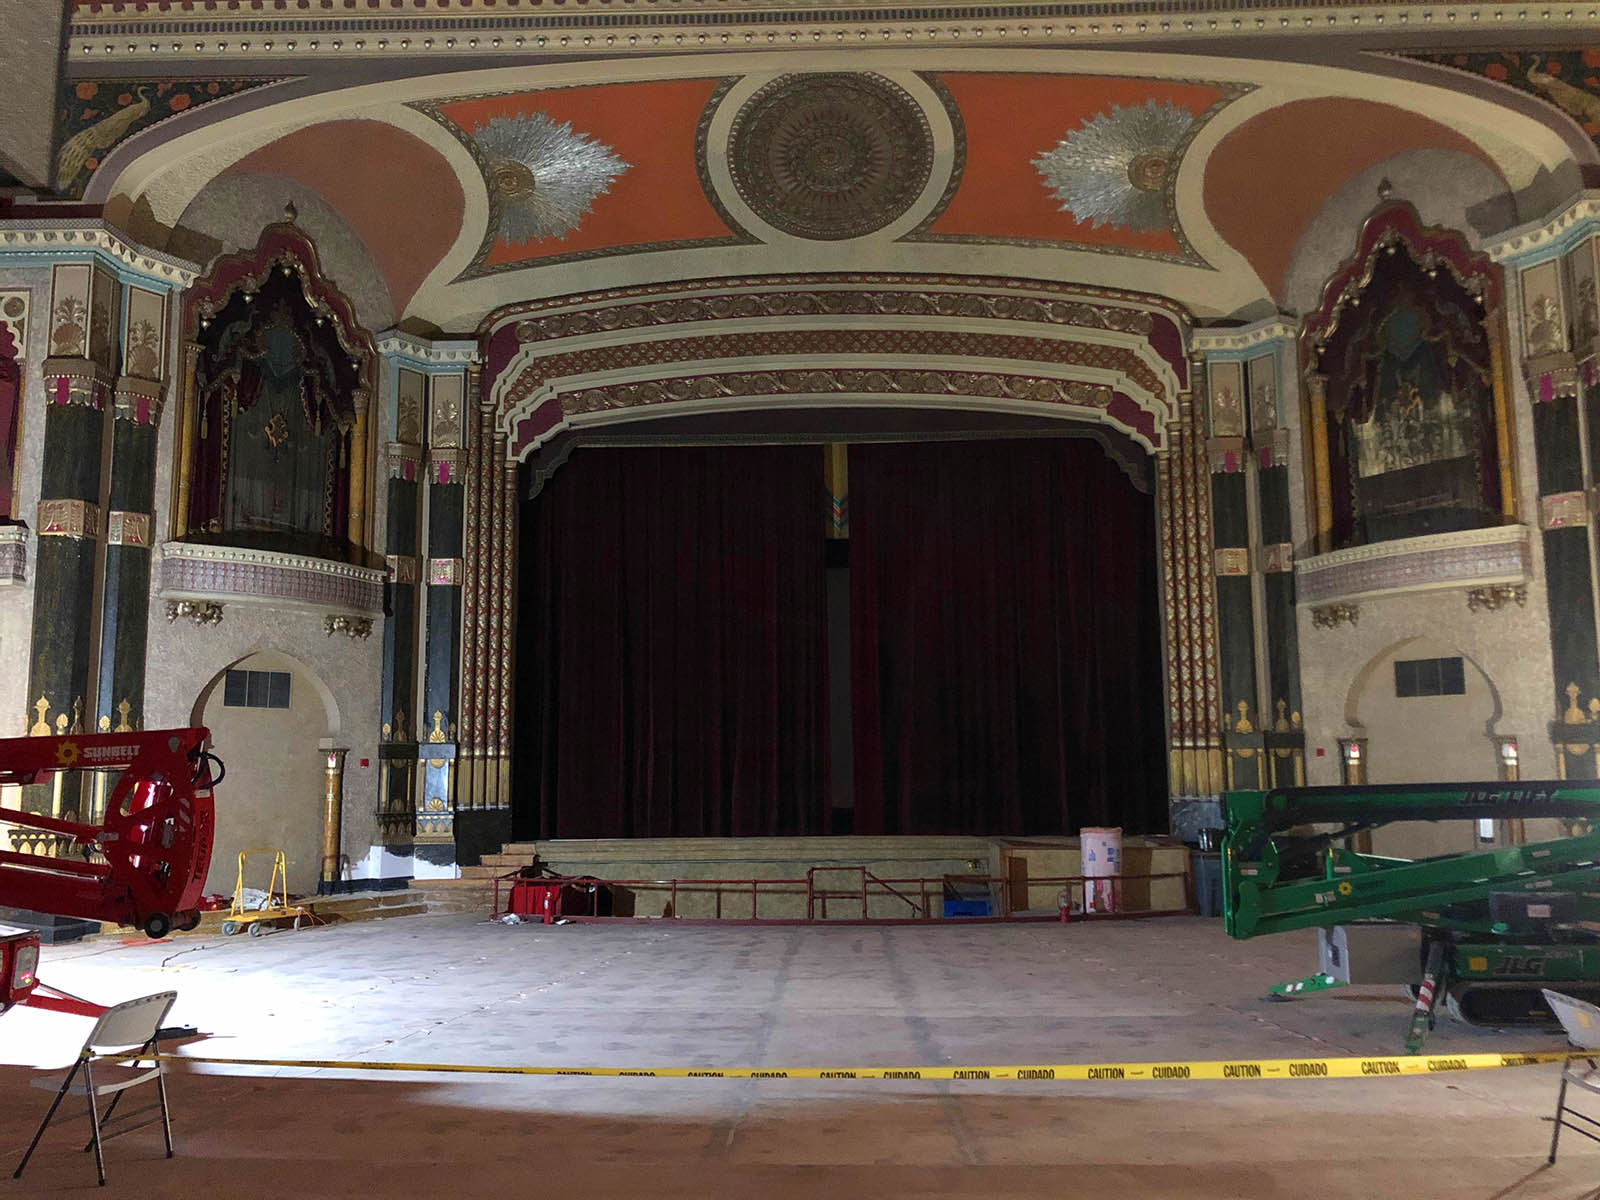 Oriental Theater is using shutdown to complete some muchneeded work